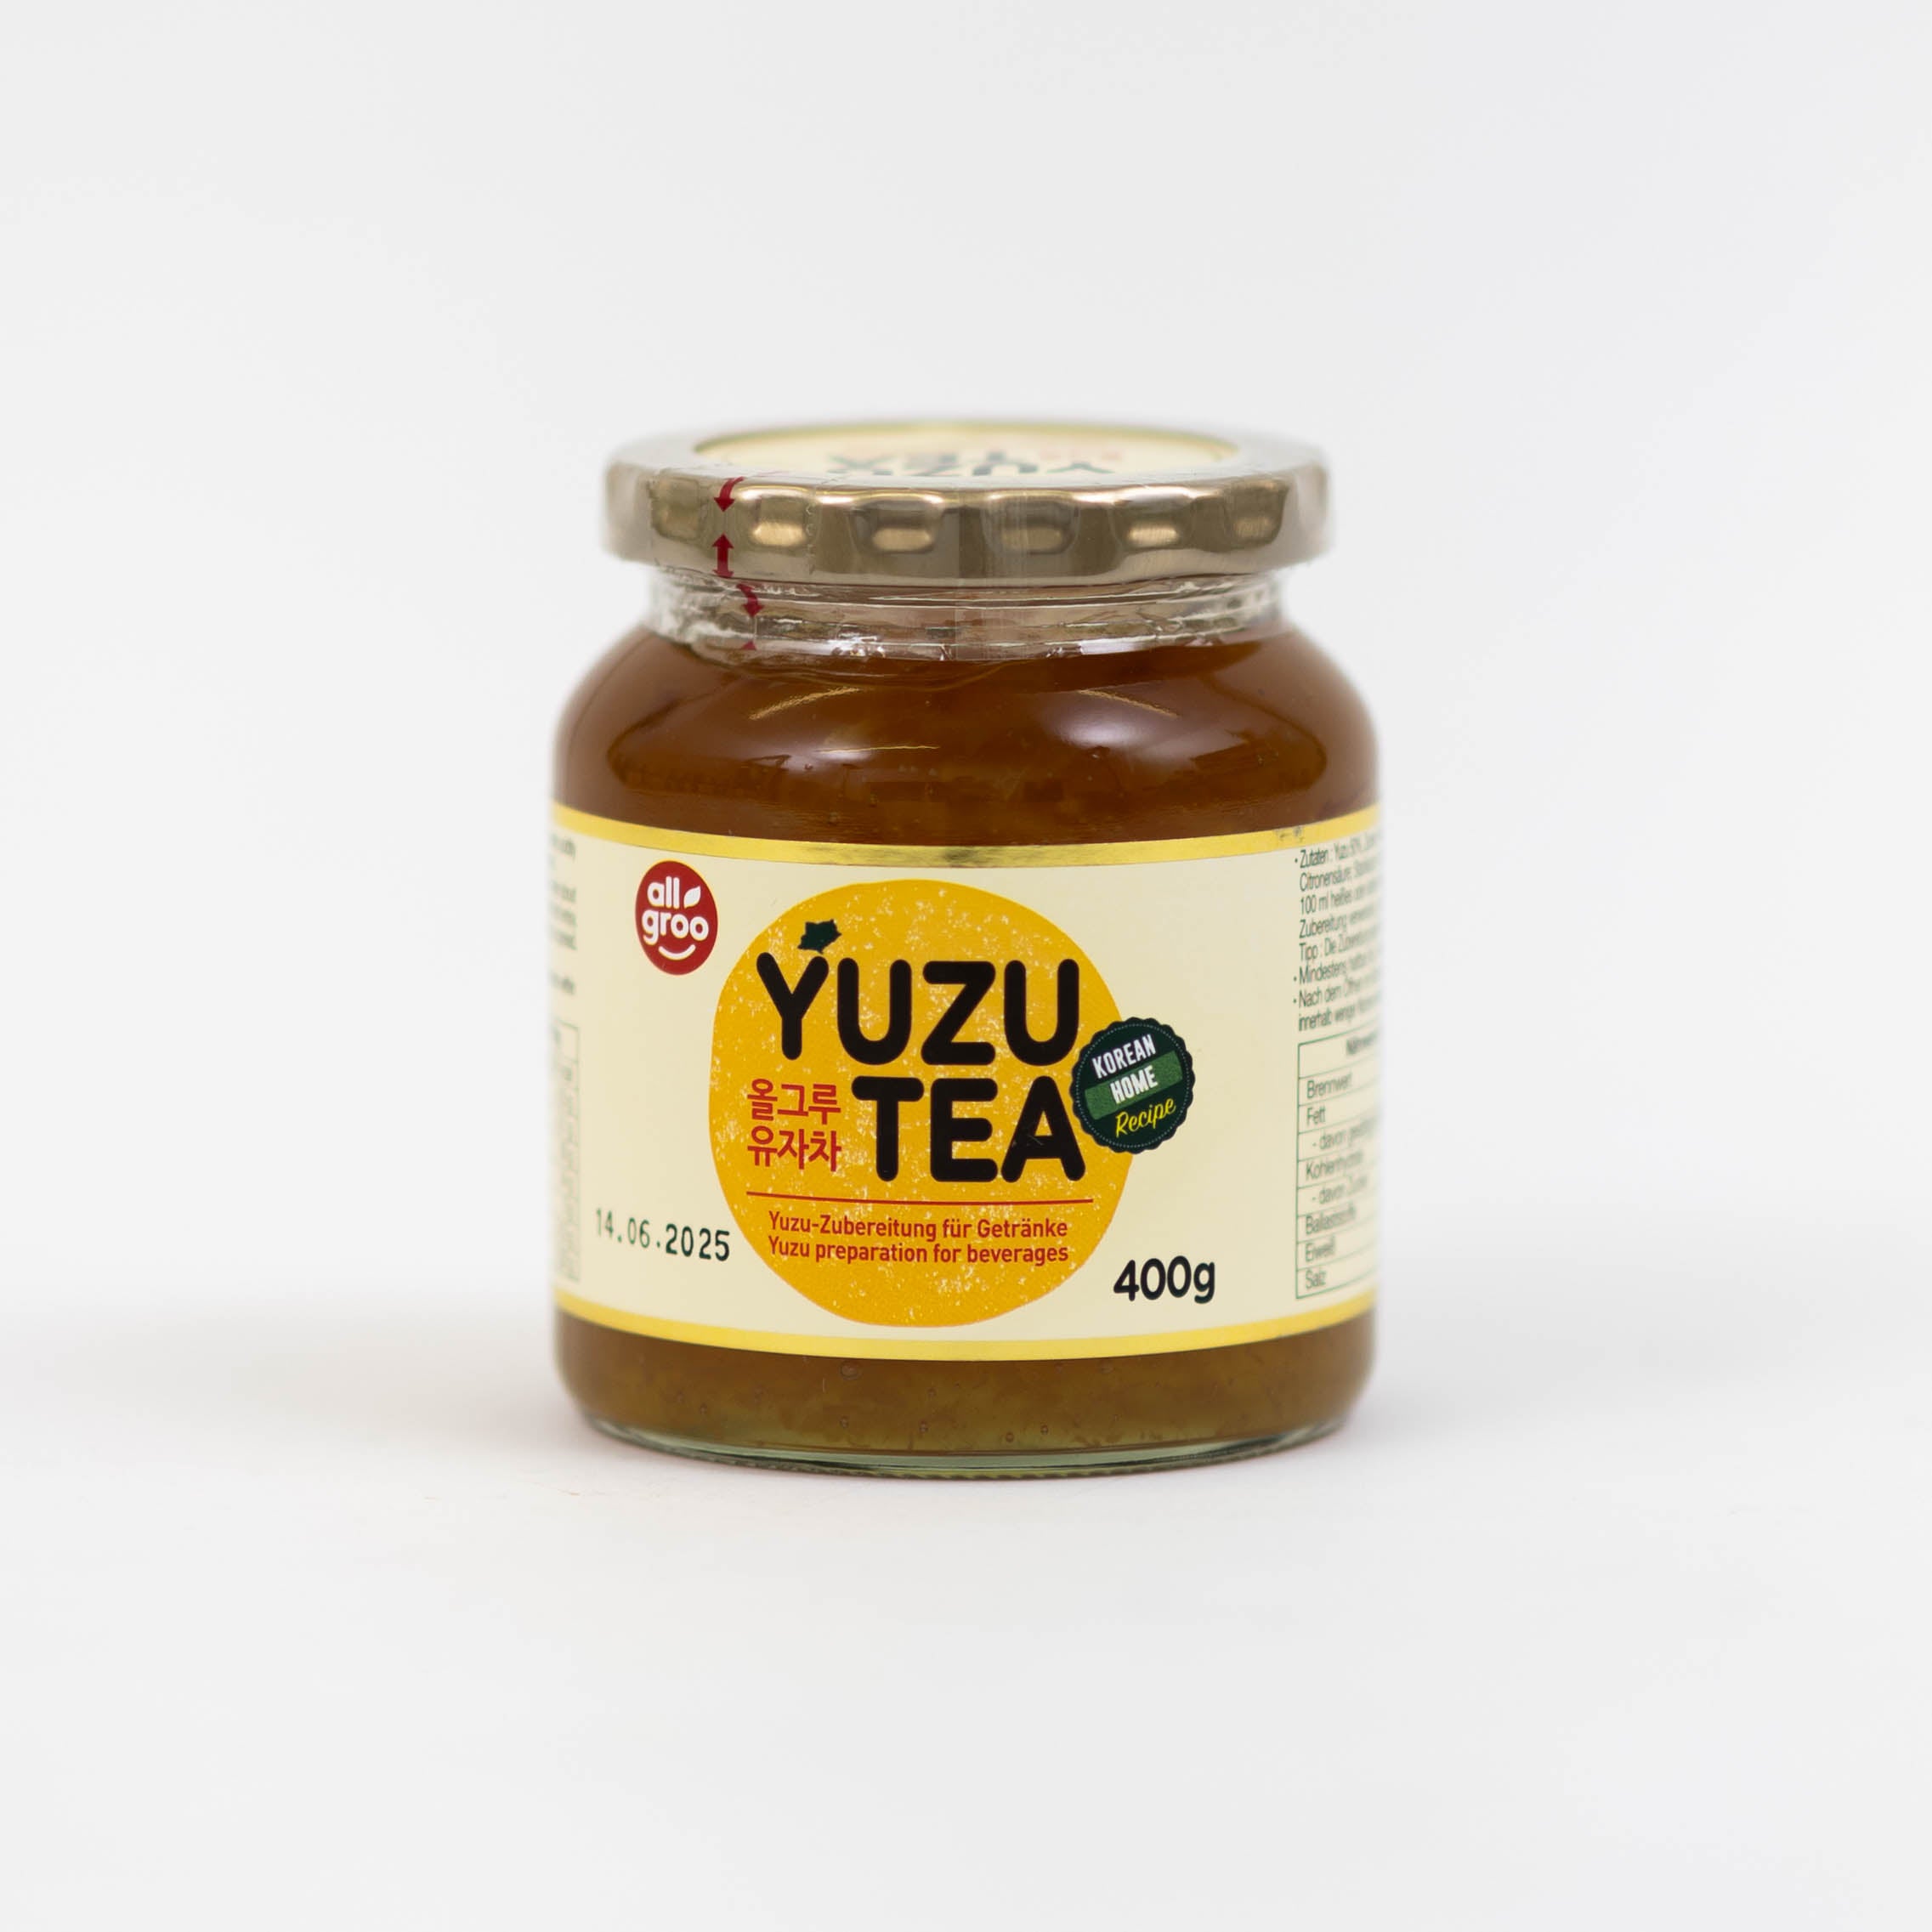 onlineshop dinese.de asiashop asiashop allgroo yuzu tee tea zubereitung asiatische getränke lebensmittel drinks